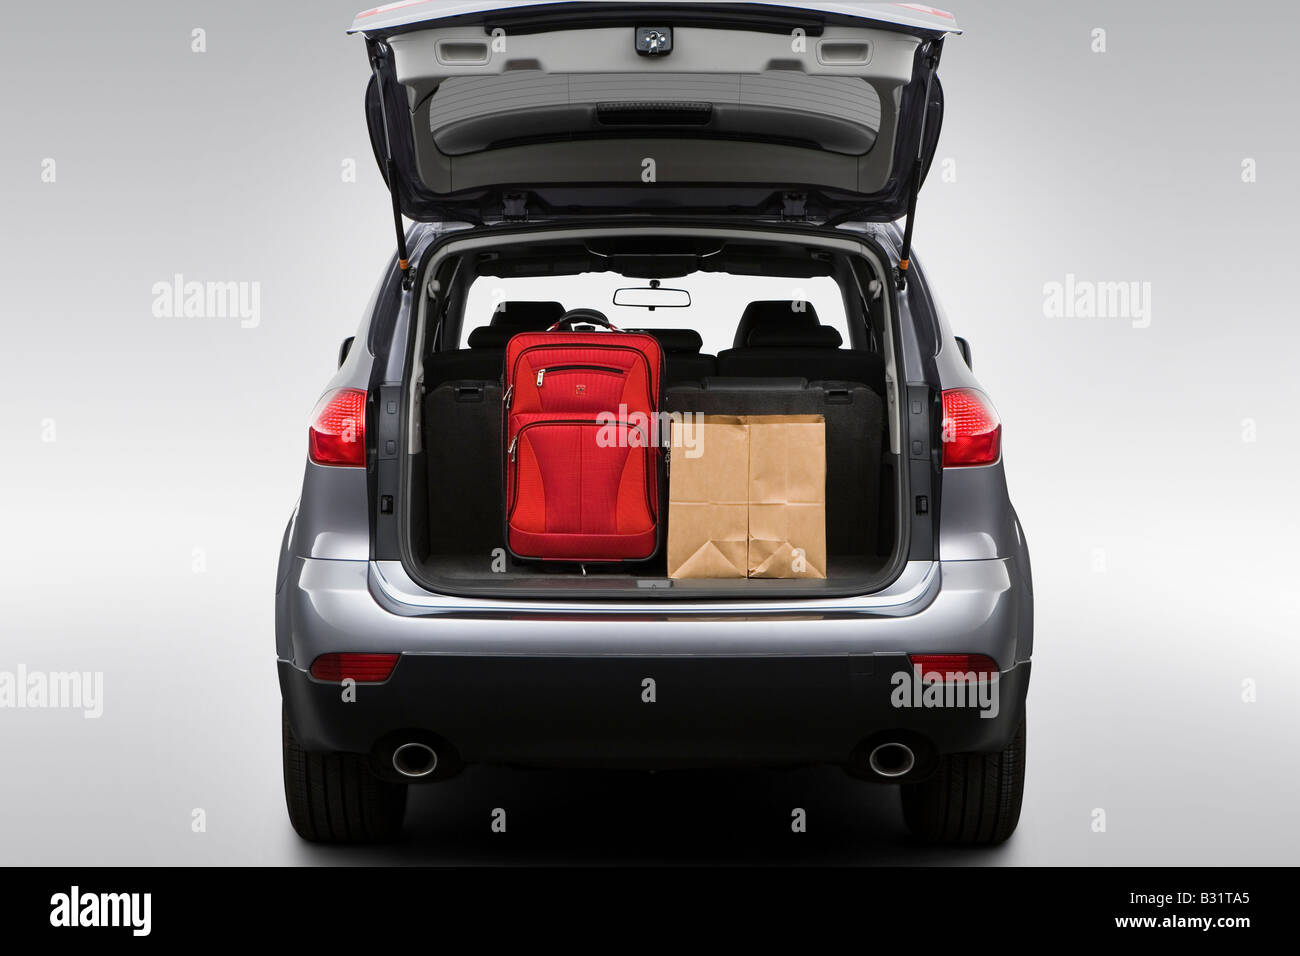 2008 Subaru Tribeca Limited in Silber - Stamm Requisiten Stockfoto